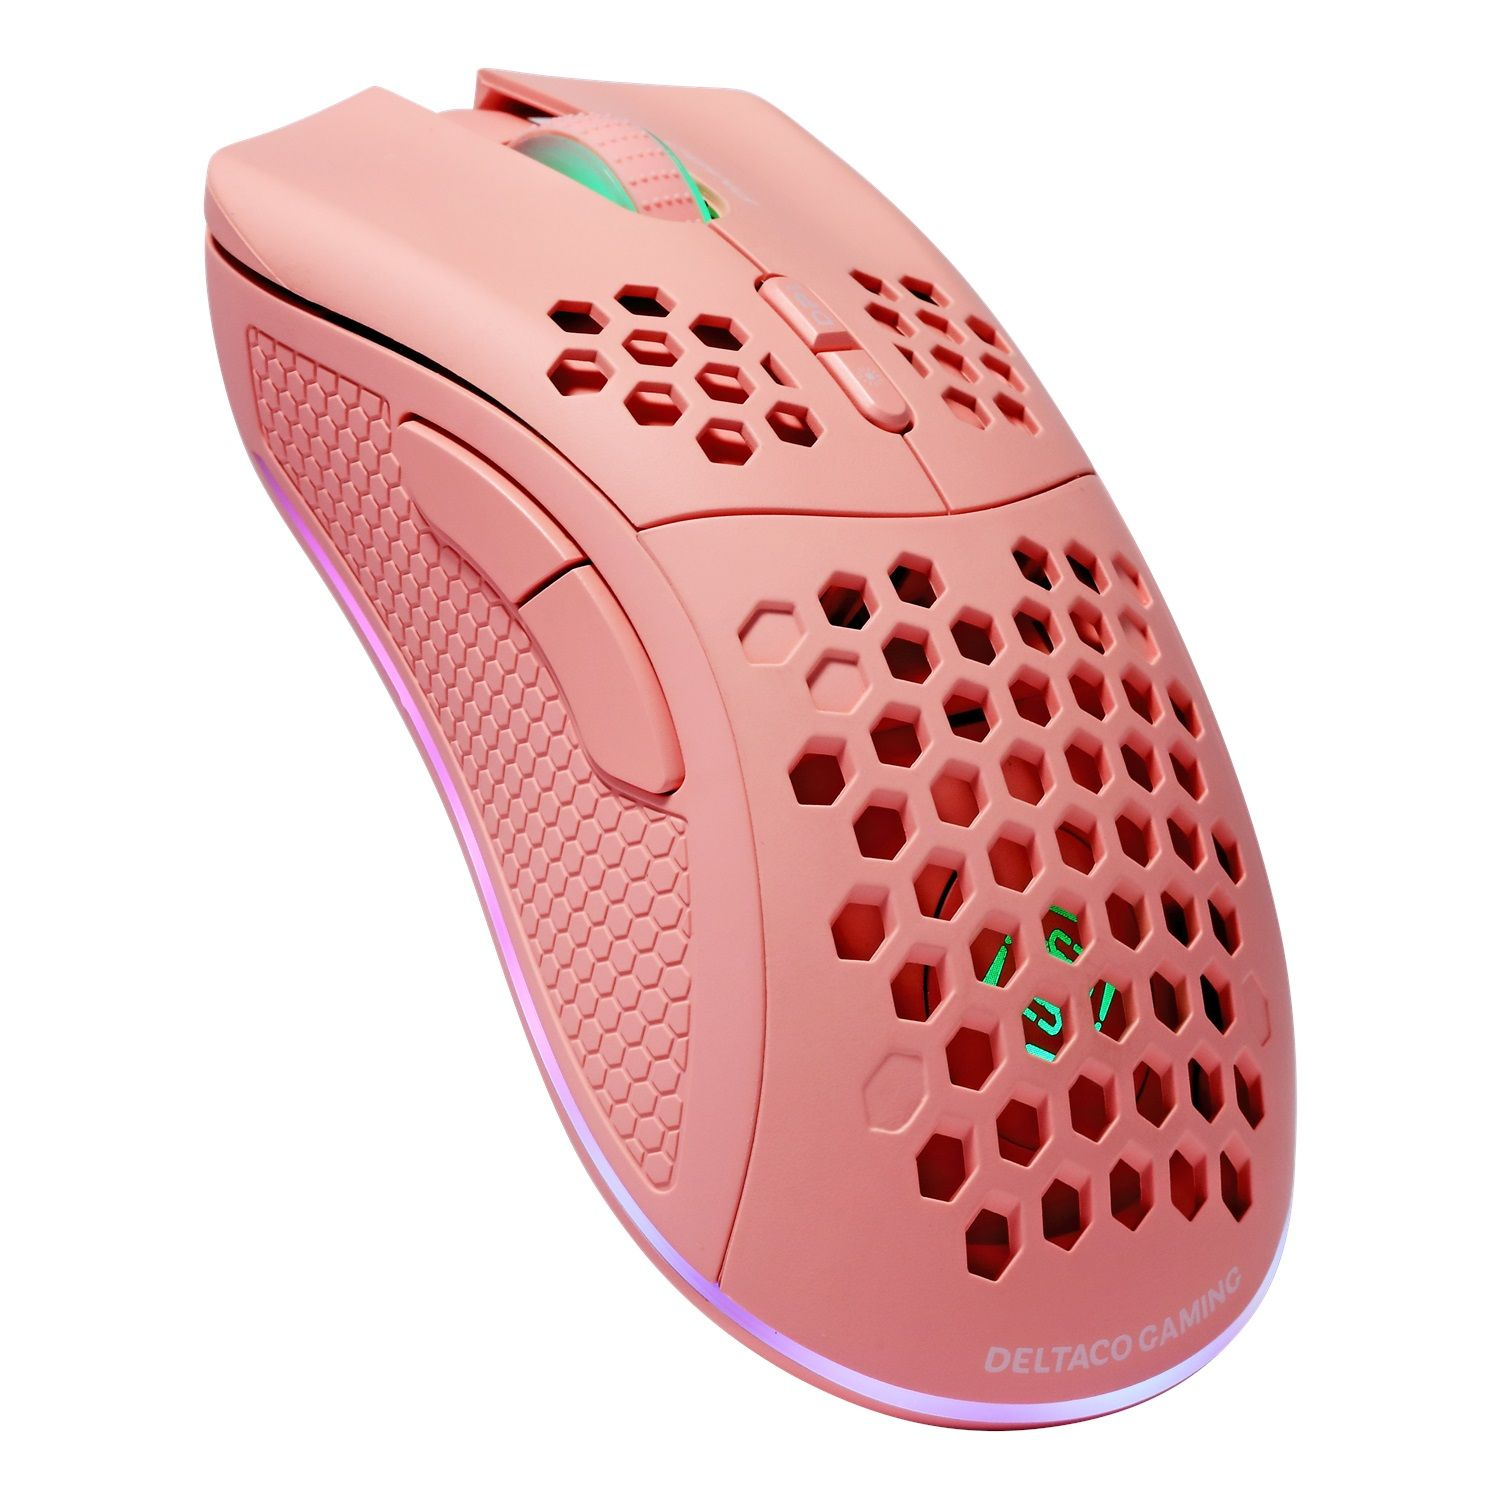 pink Maus, DM220 DELTACO GAMING